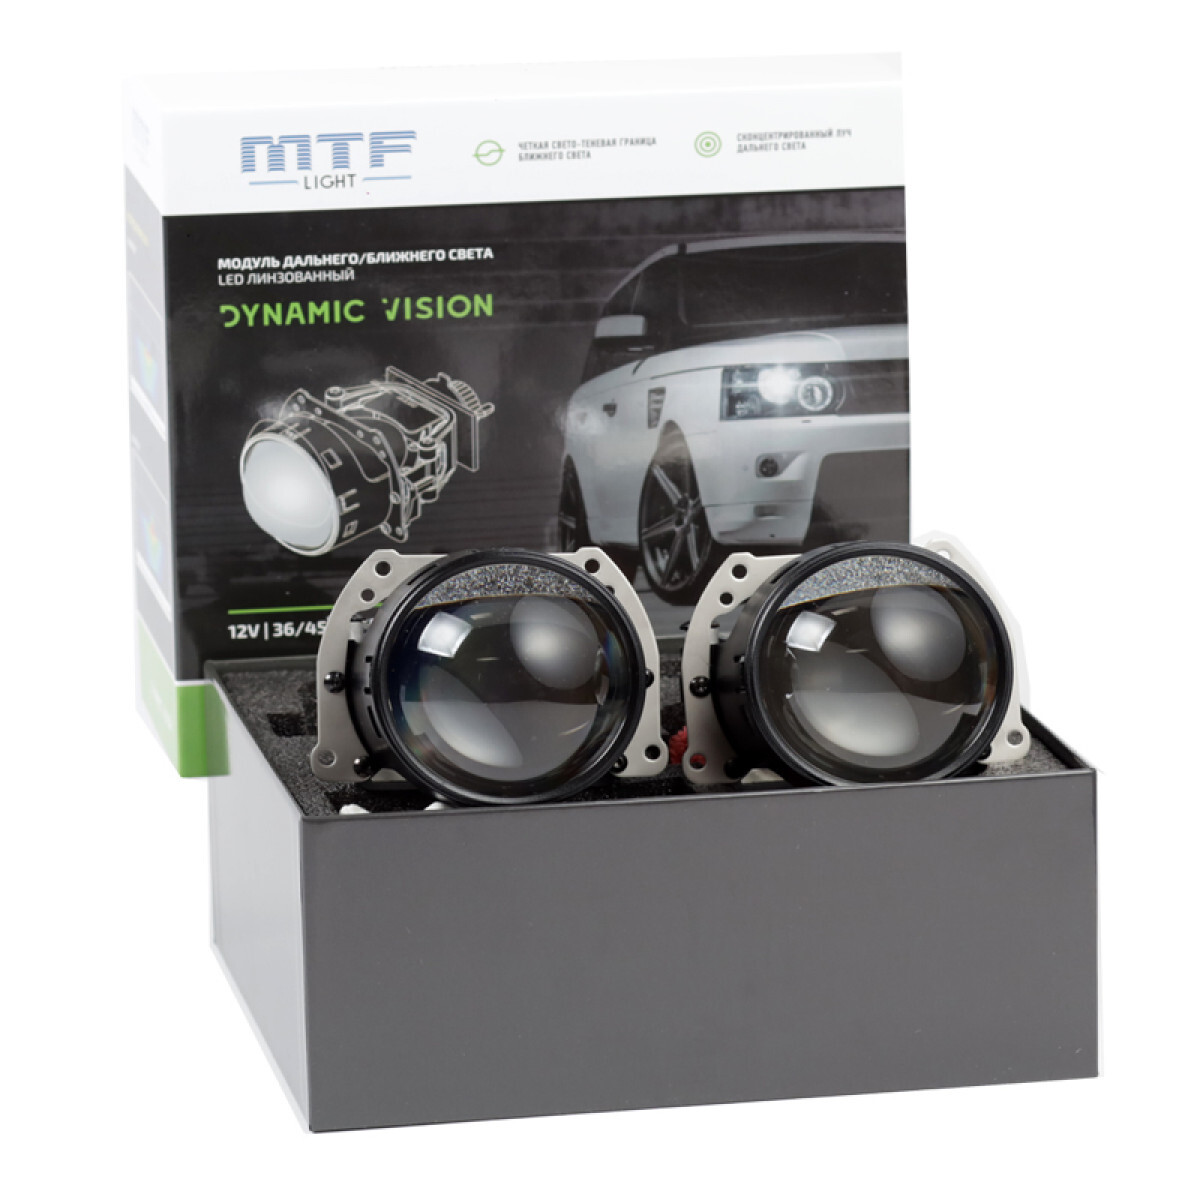 Dynamic vision led. MTF Light Dynamic Vision 3 bi-led. Линза bi-led 12v,45w,5500k,2.5" MTF Dinamic Vision Compact 2шт. Светодиодные модули ближнего/дальнего света MTF Light Dynamic Vision. MTF Dynamic Vision led 3.